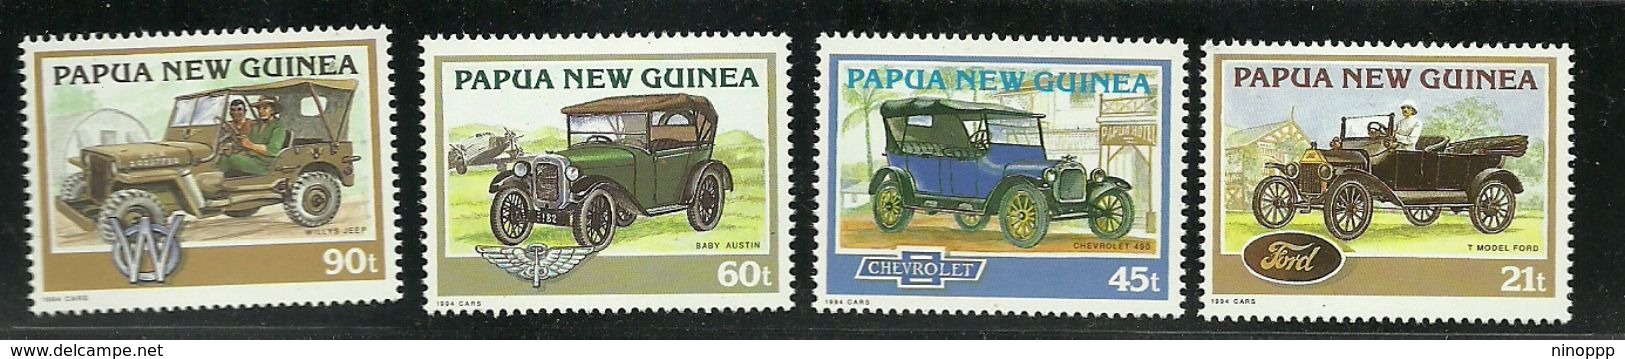 Papua New Guinea SG 725-728 1994 Classic Cars MNH - Papoea-Nieuw-Guinea